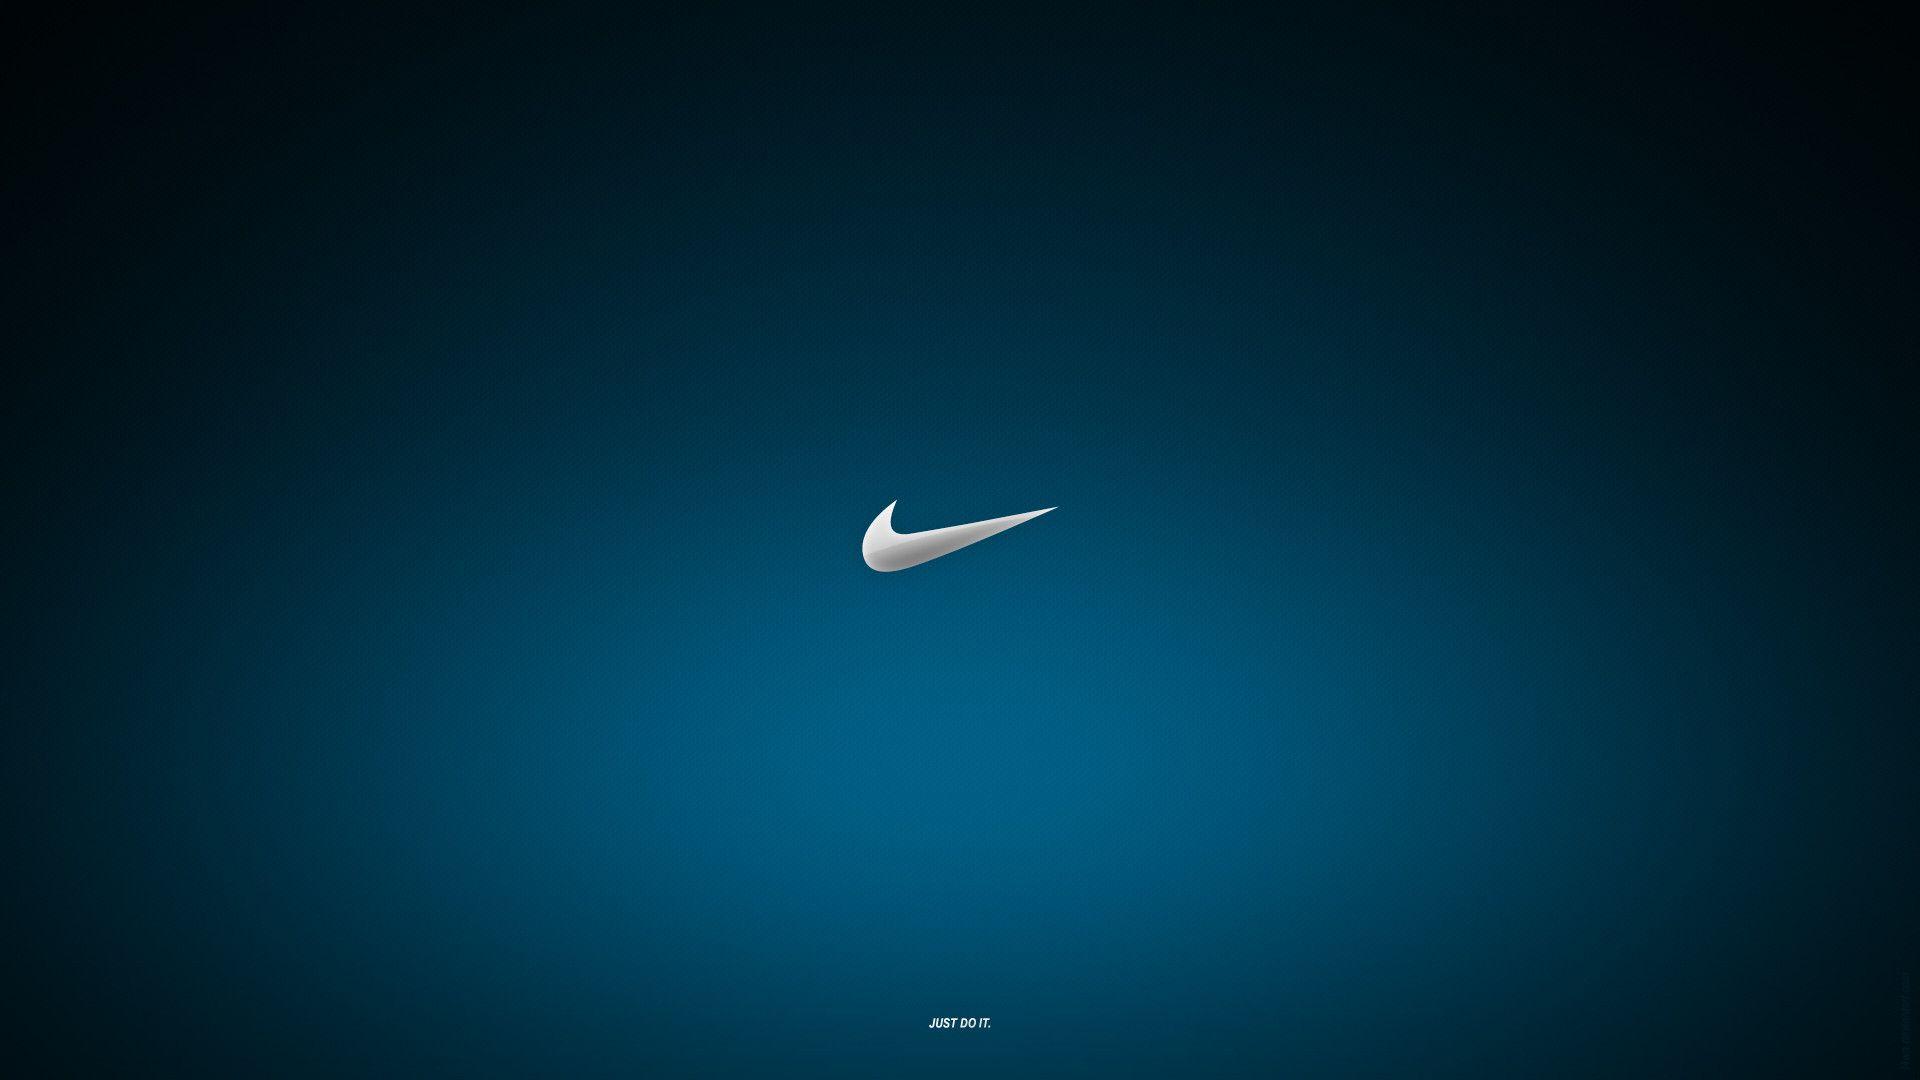 Nike Computer Wallpaper, Desktop Background 1920x1080 Id: 212237